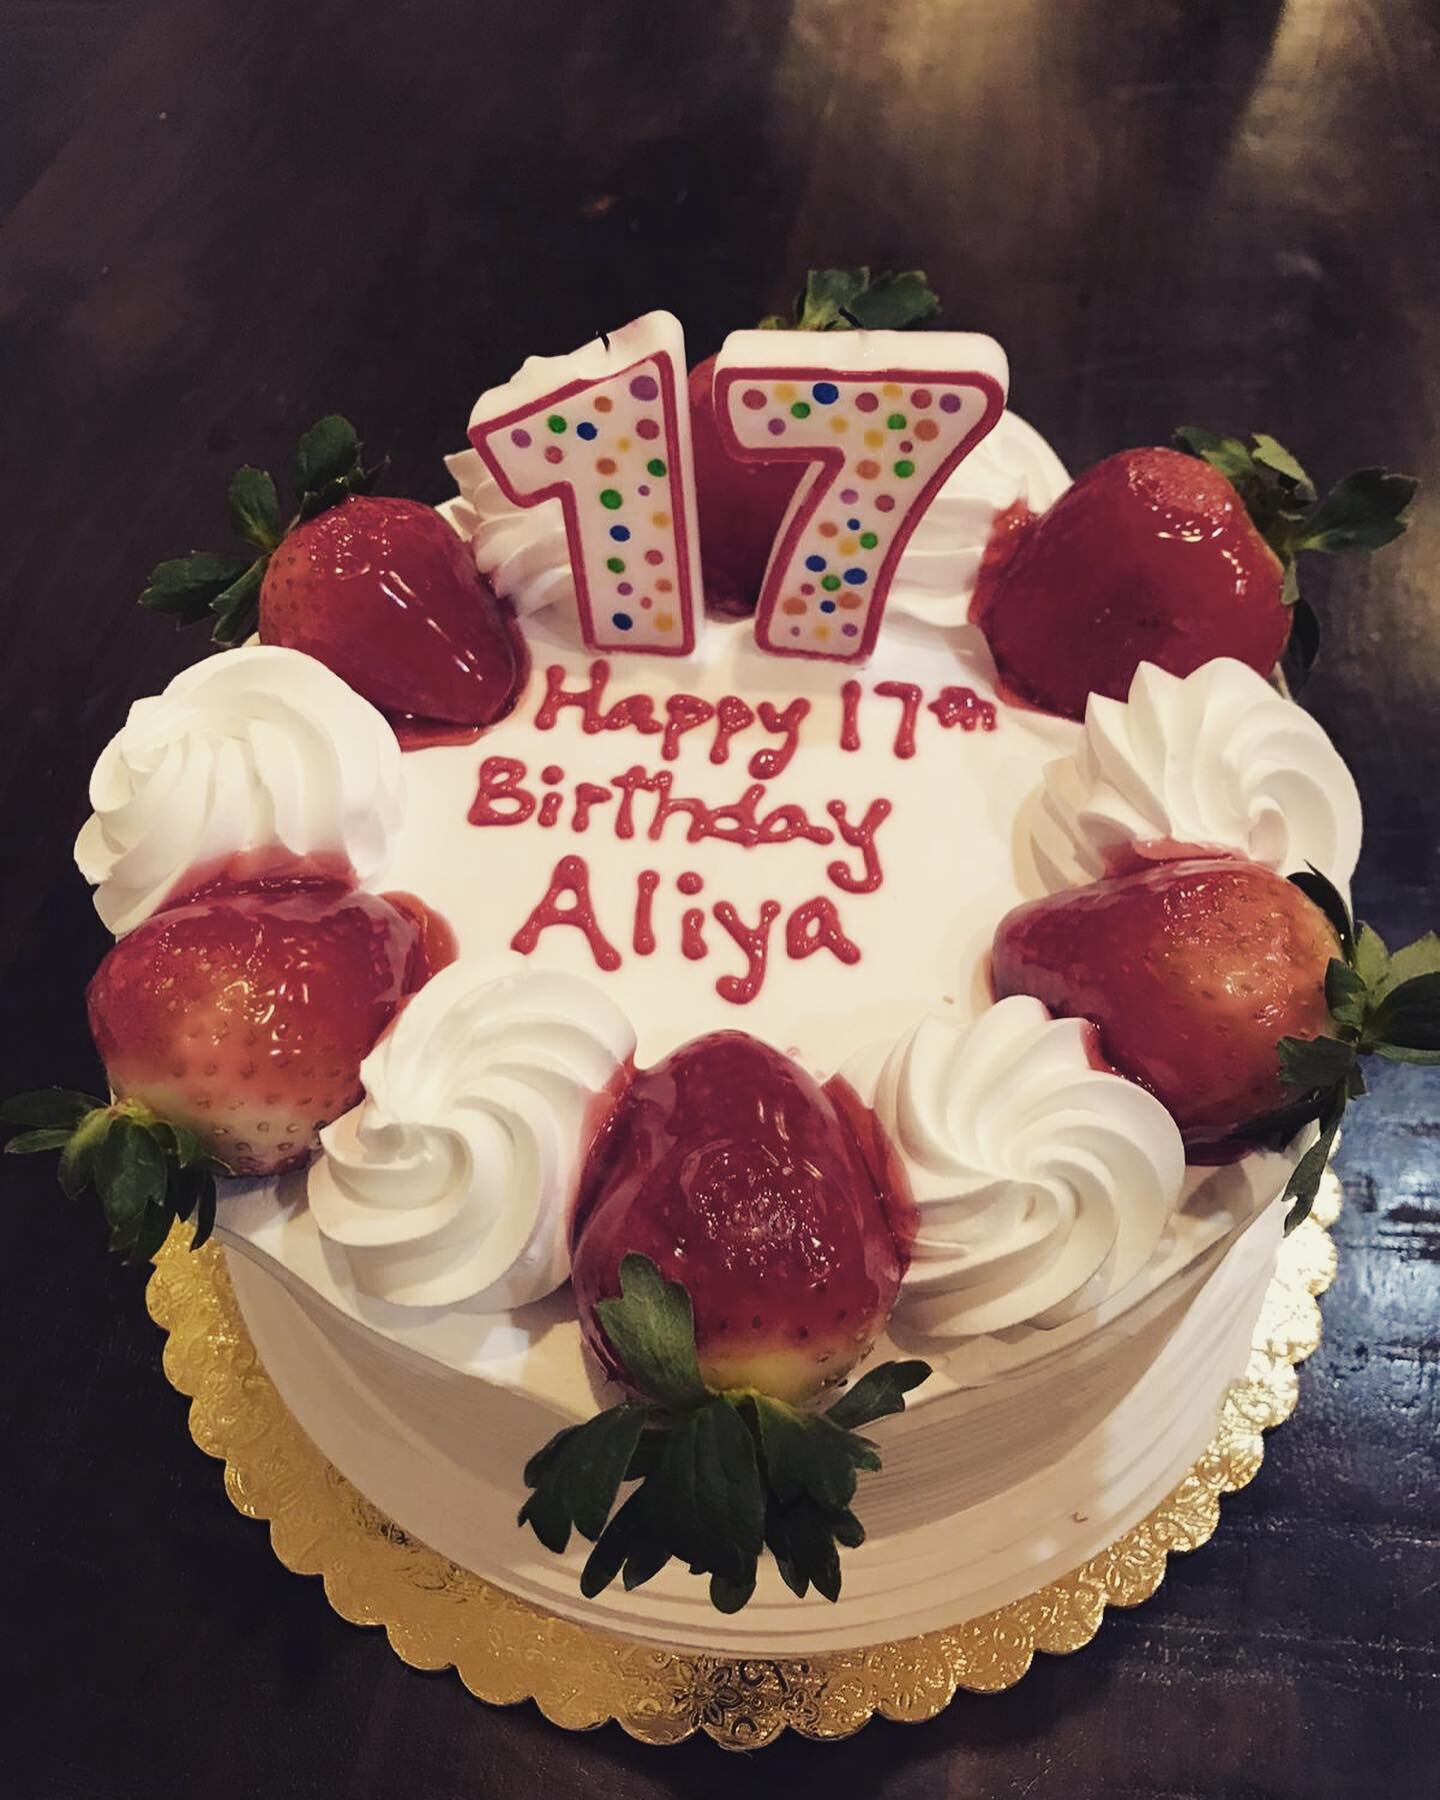 ✨Finally 17✨ Cake is definitely my happy place~ 🍰🍓🥰
&bull;
&bull;
&bull;
&bull;
#birthday #birthdaycake #cake #seventeen #17 #quarantinebirthday #strawberry #cute #happybirthday #sushi #strawberrycake #berryberet